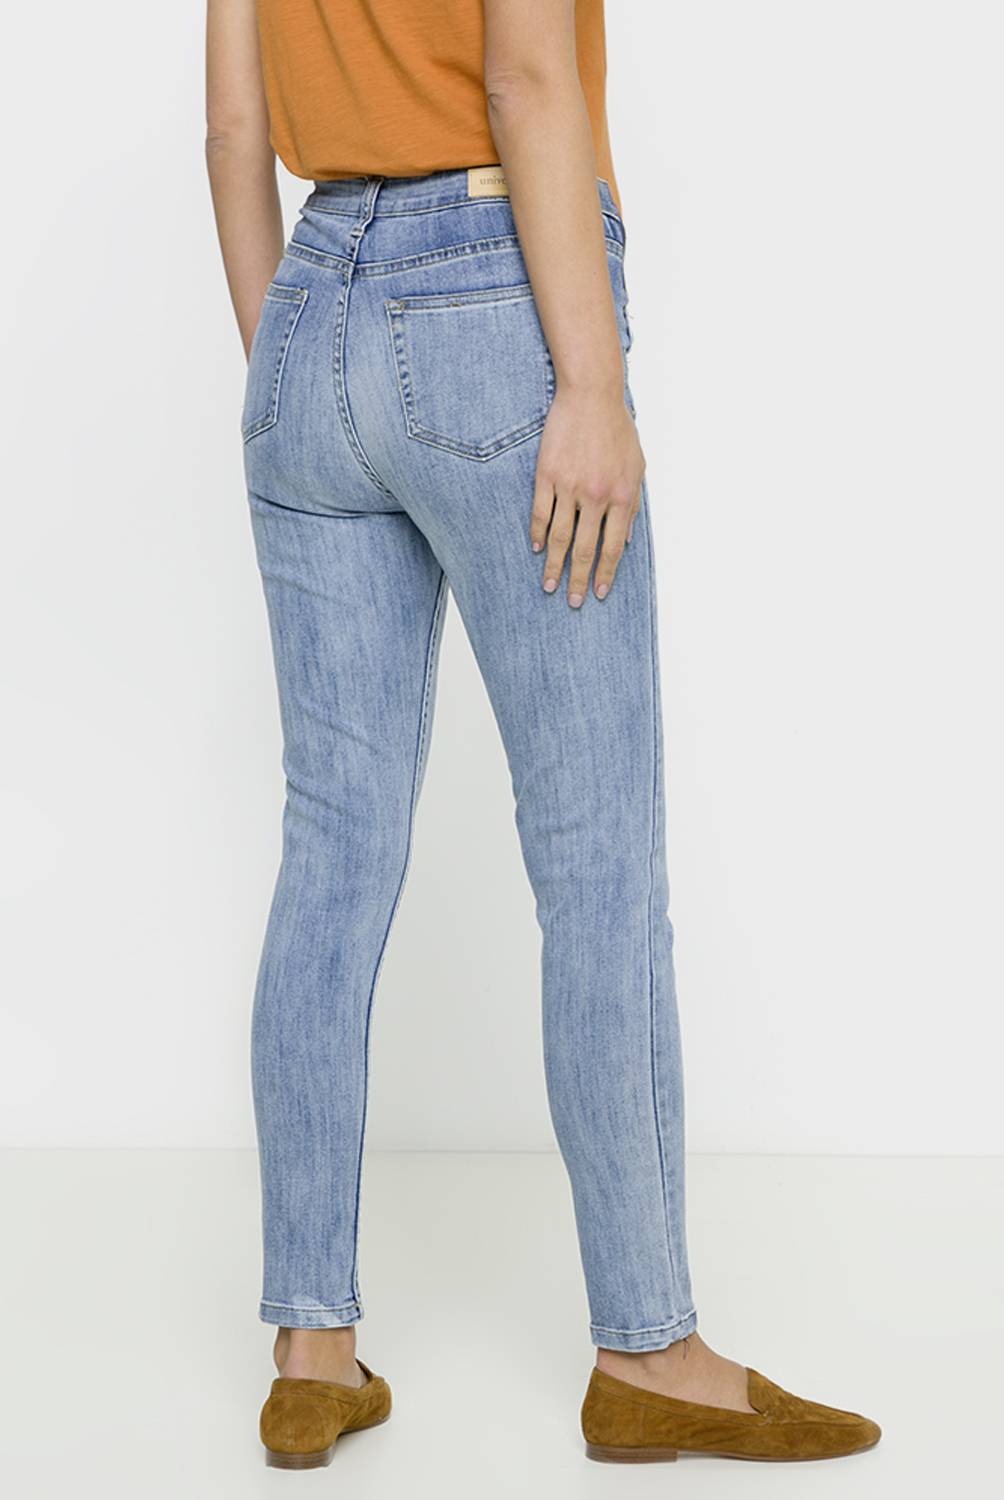 UNIVERSITY CLUB - Jeans de Algodón Skinny Mujer